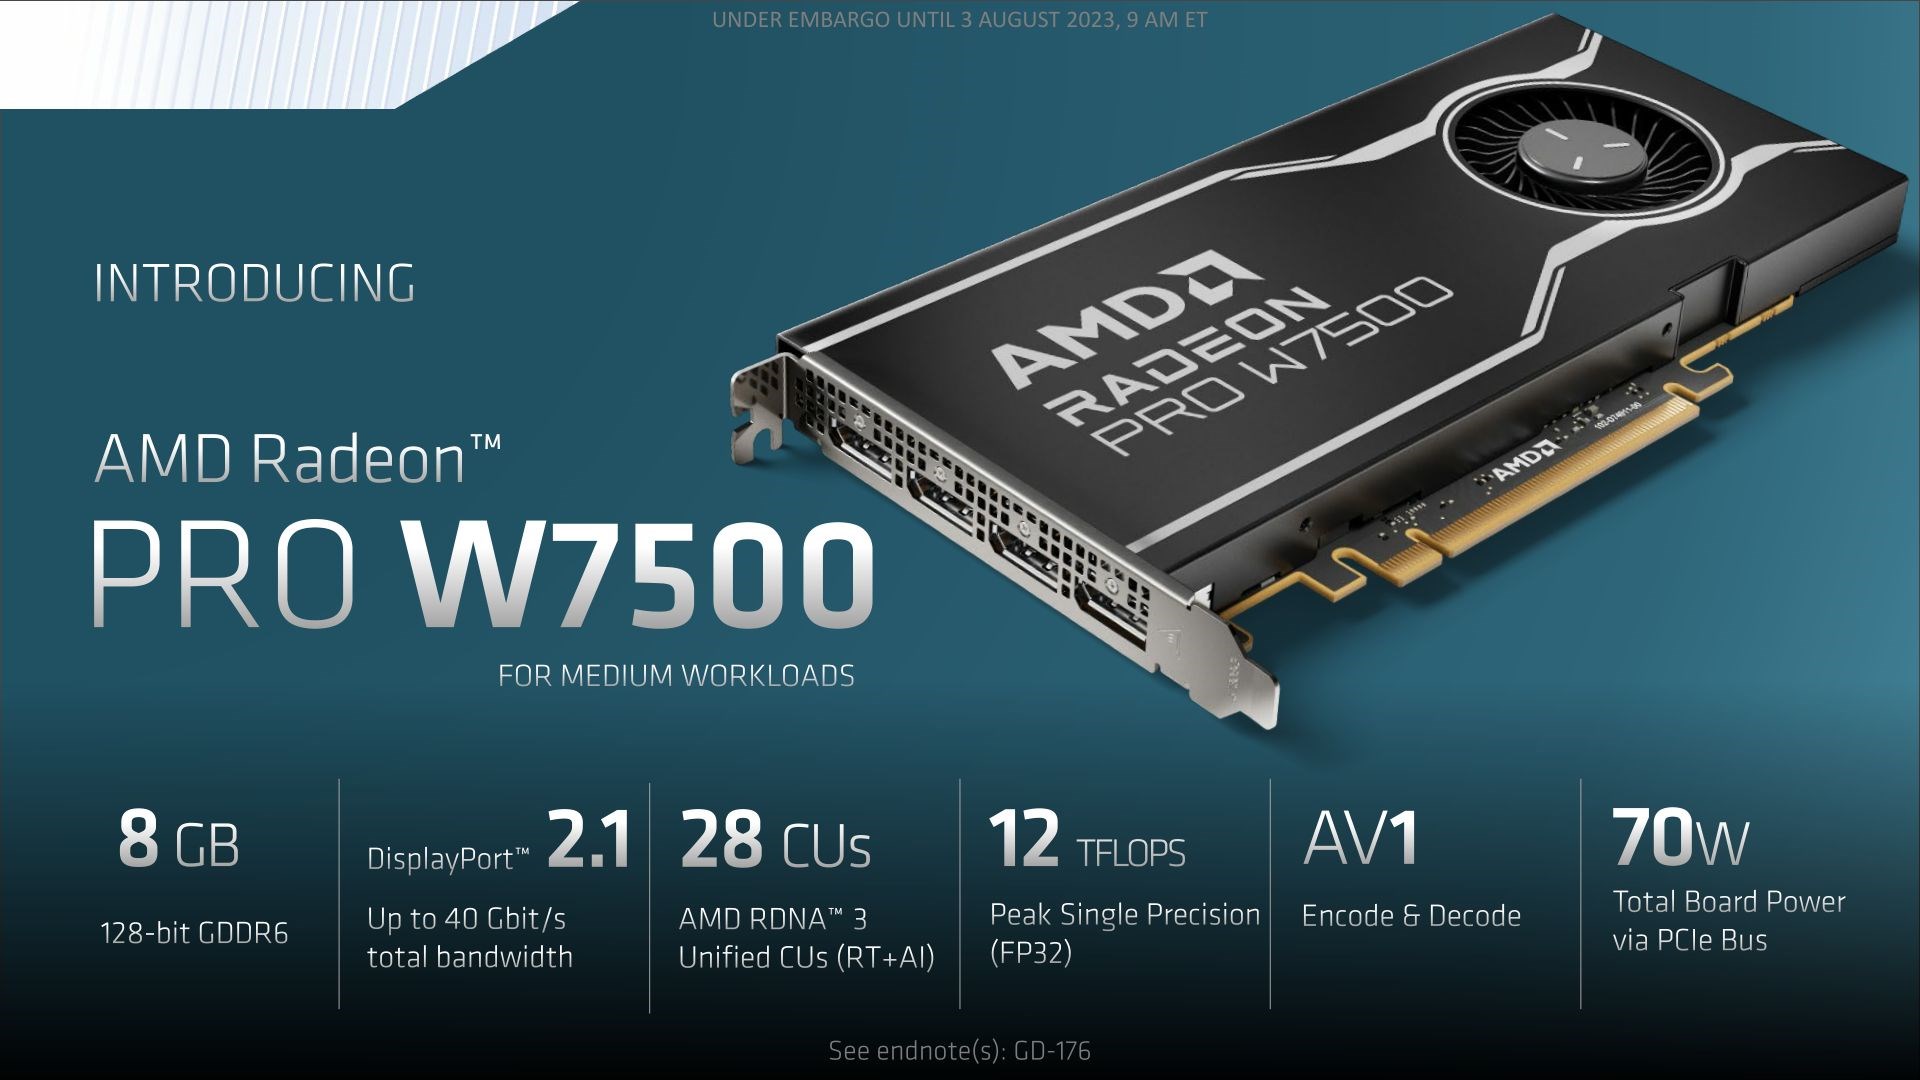 AMD Radeon Pro W7500 